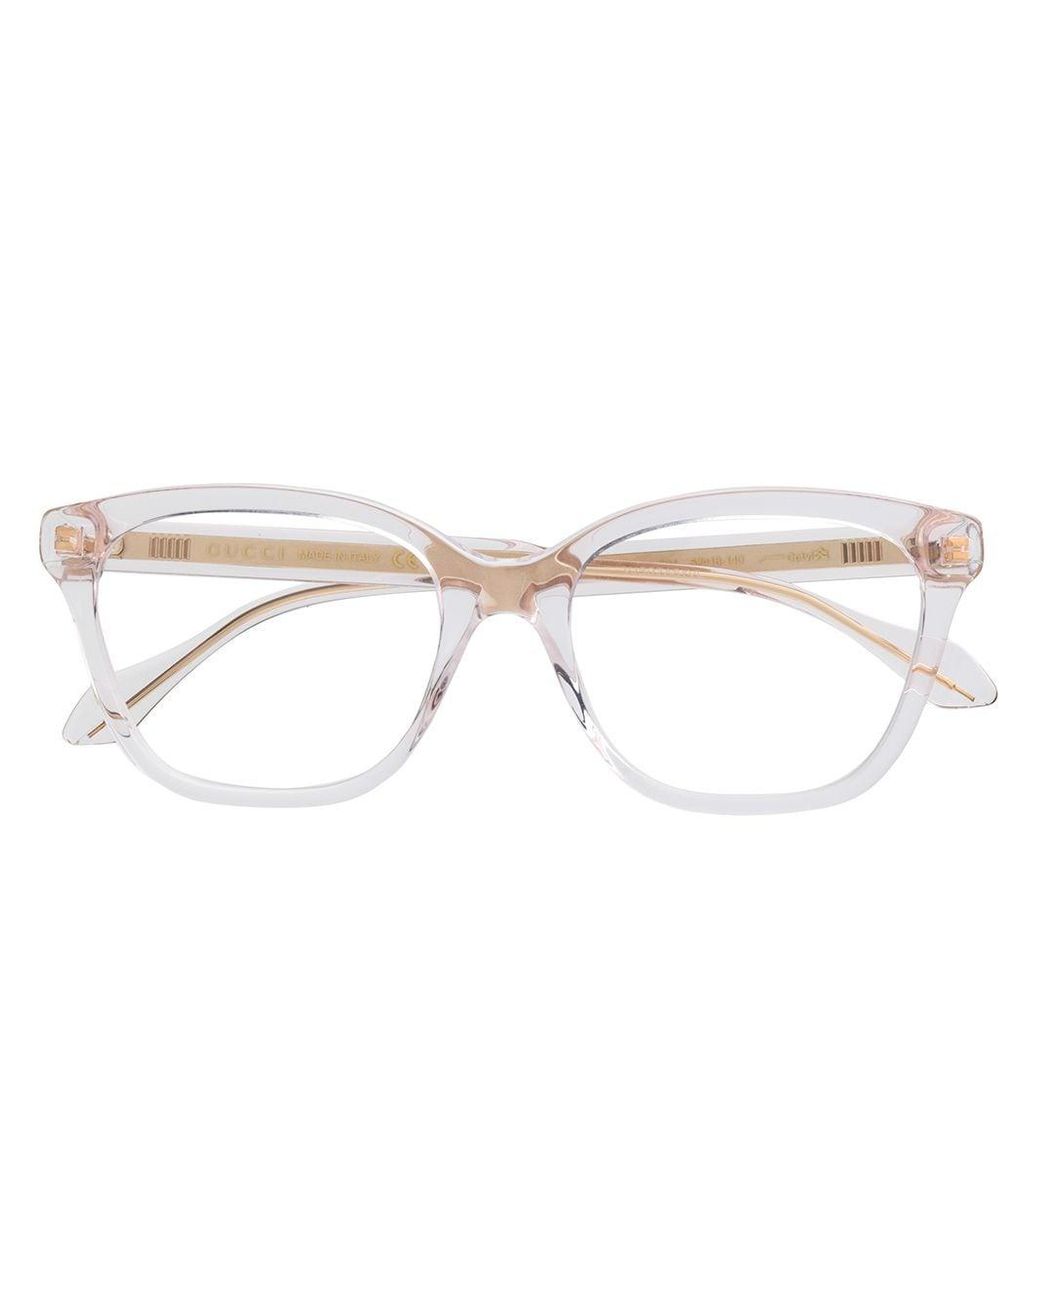 Gucci Clear Frame Glasses | Lyst Canada